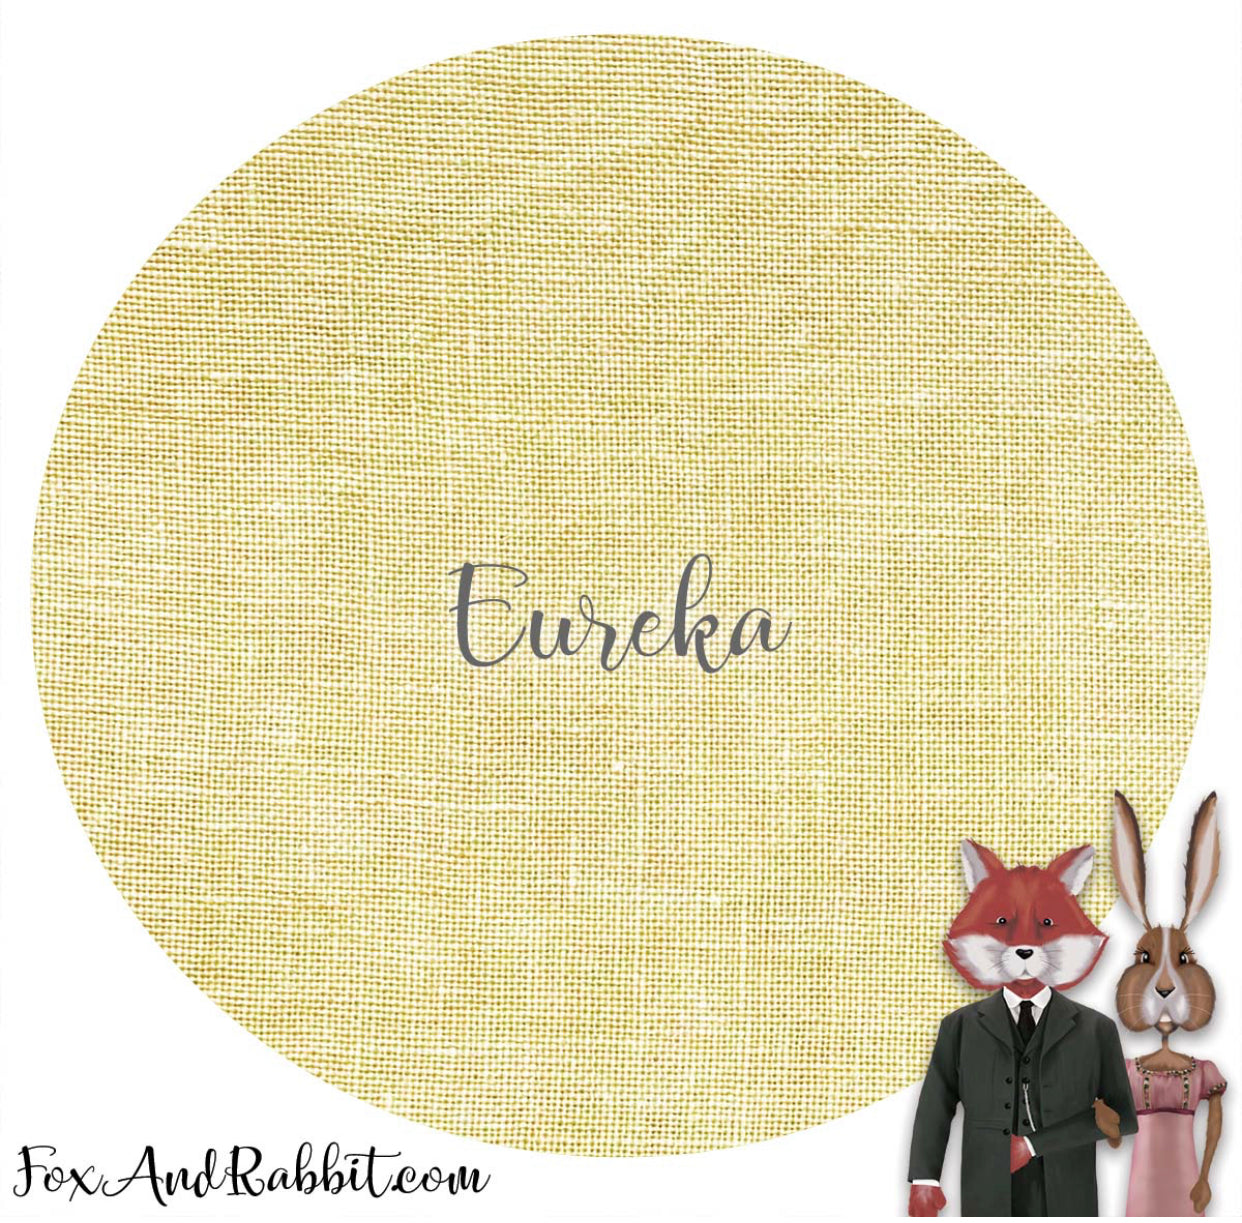 36 Count Eureka Fox and Rabbit